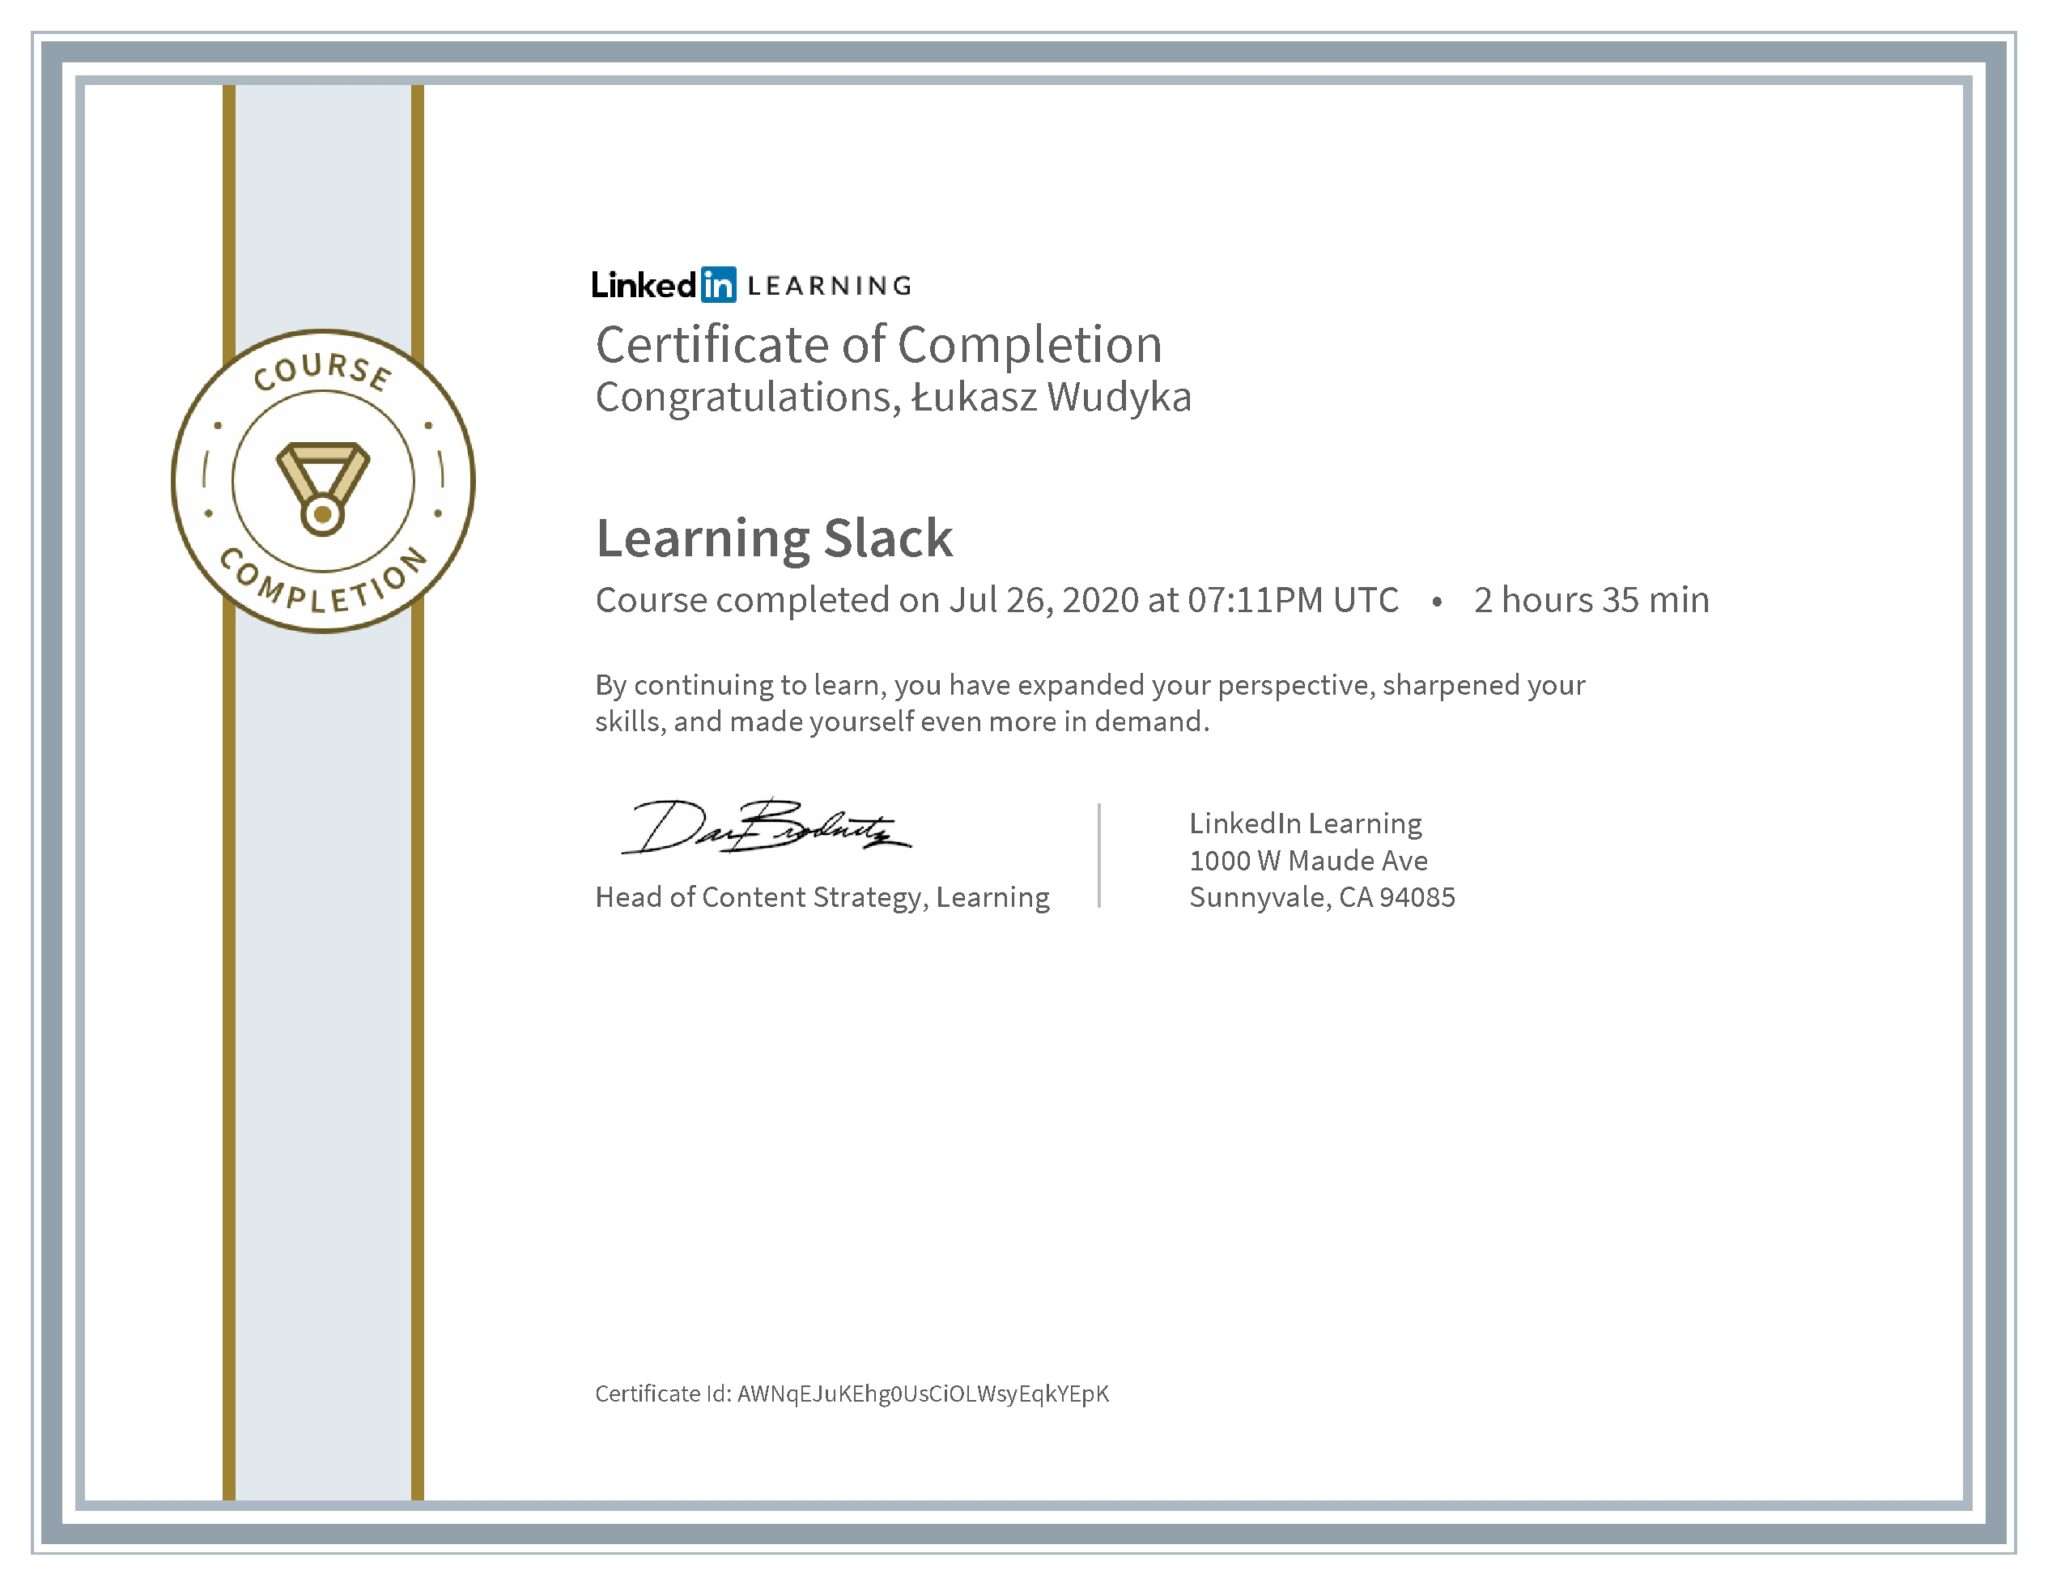 Łukasz Wudyka certyfikat LinkedIn Learning Slack